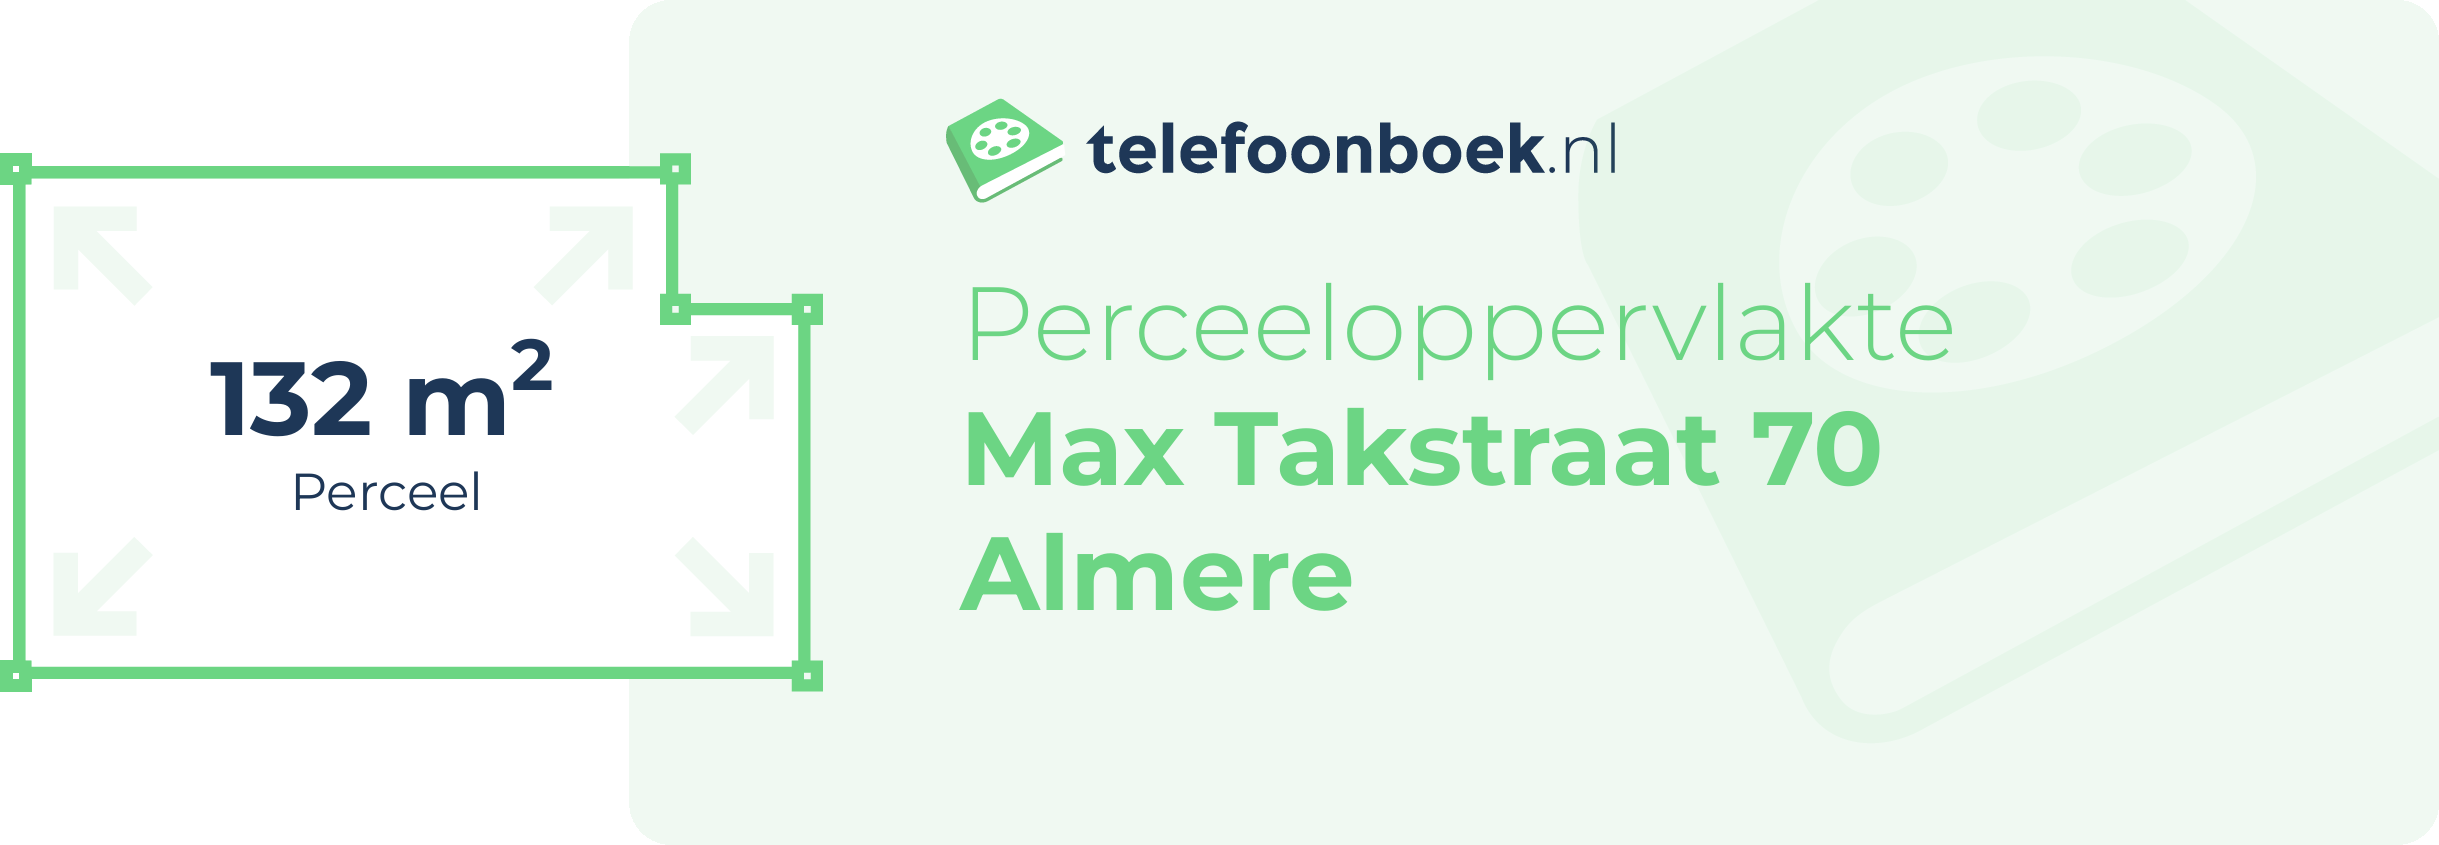 Perceeloppervlakte Max Takstraat 70 Almere